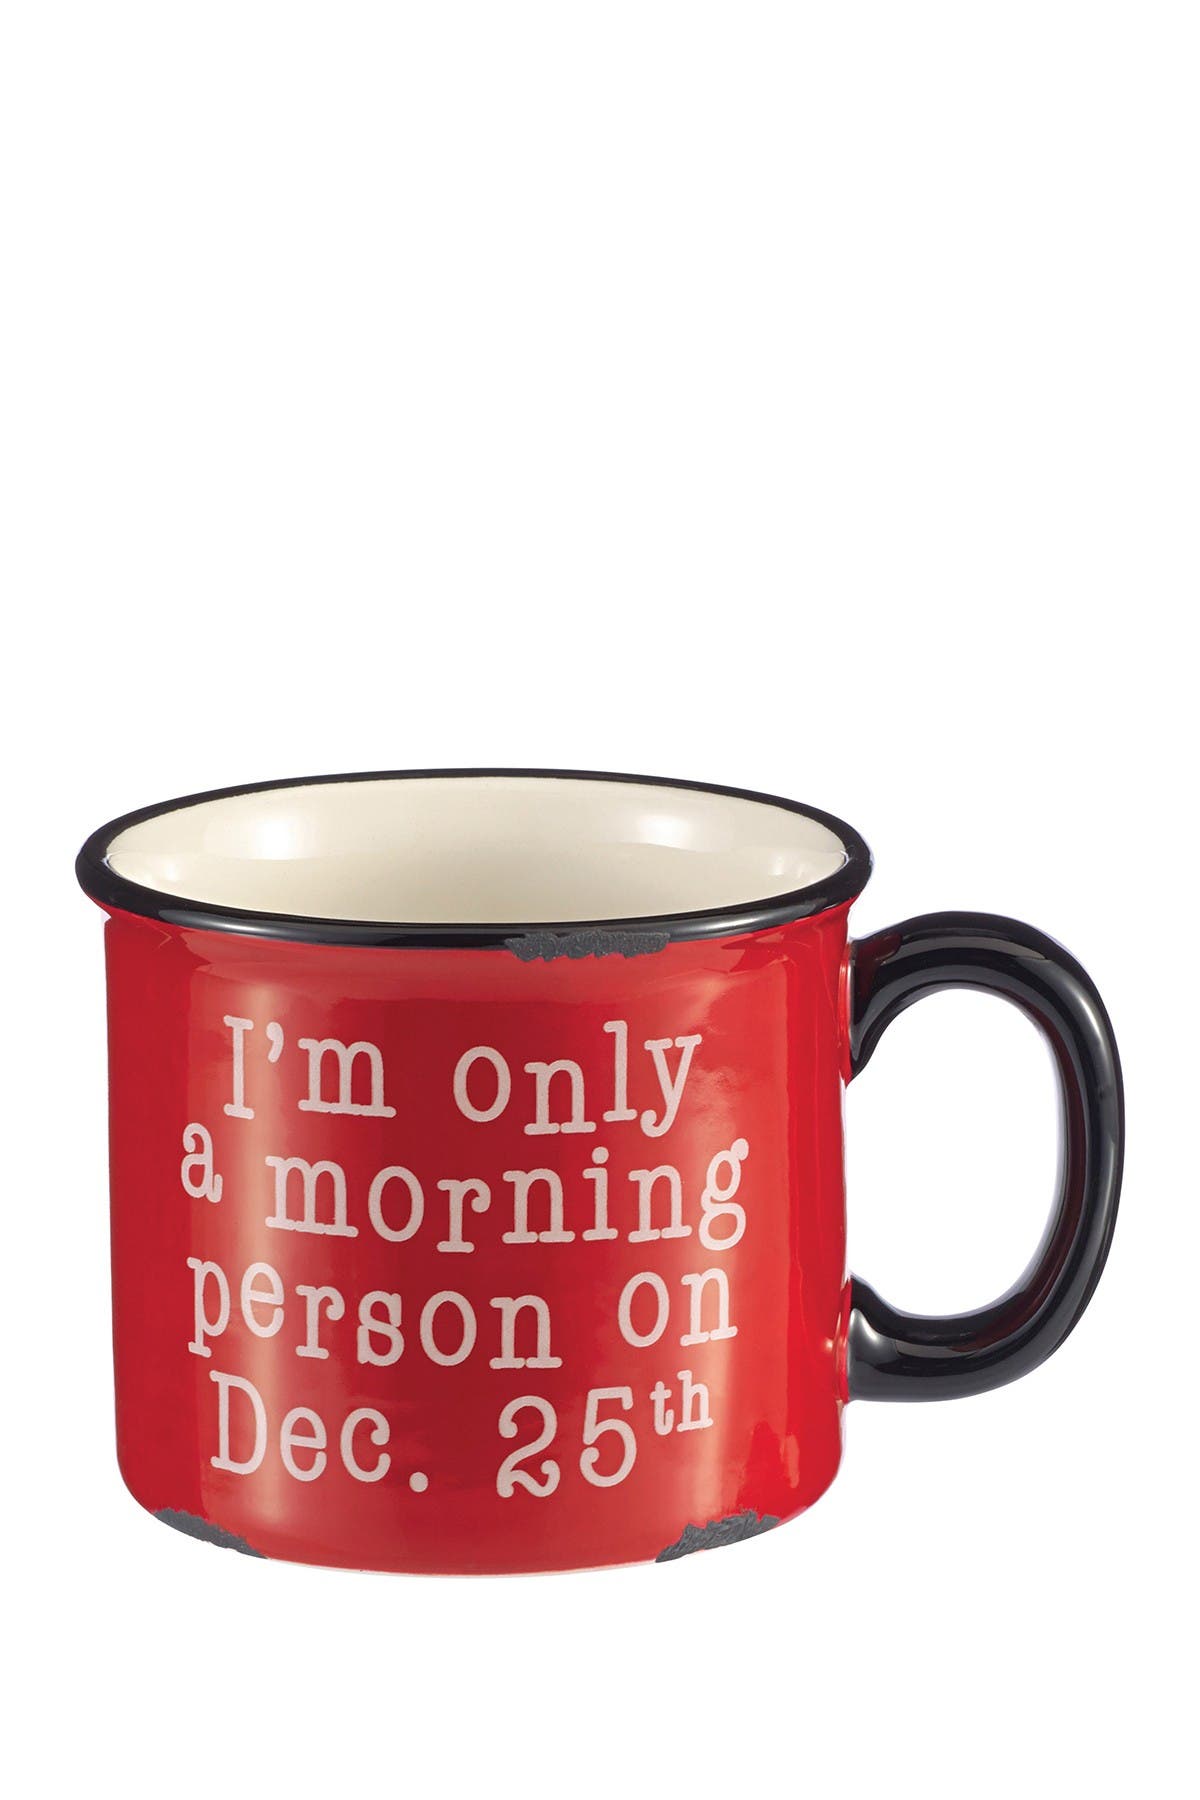 Morning Person Only On Christmas Mug Xmas Novelty Secret Santa Gift Present 125